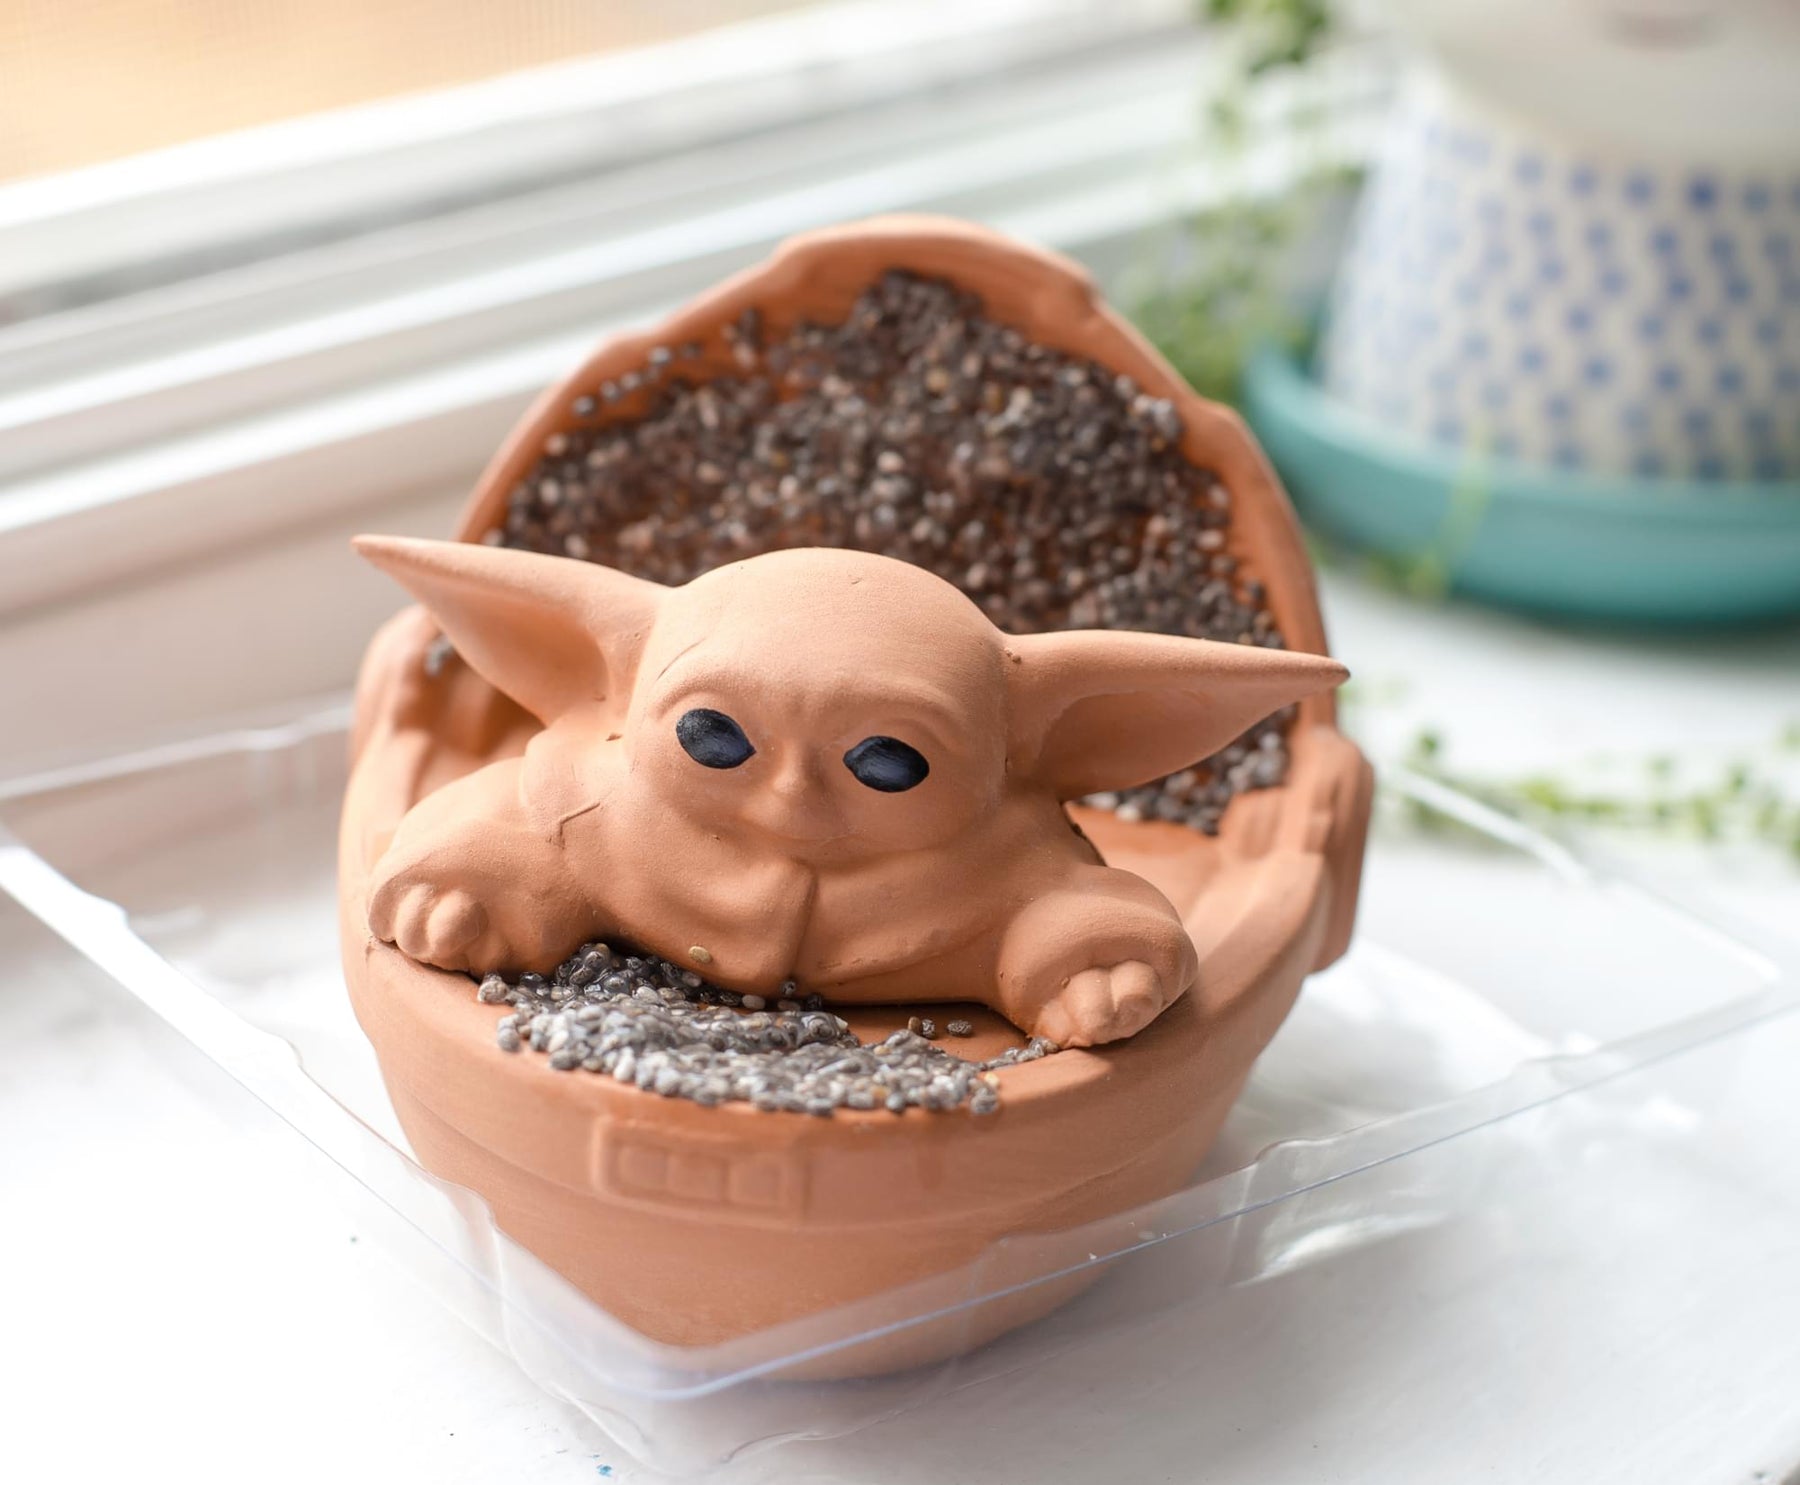 Star Wars: The Mandalorian The Child Baby Yoda Chia Pet Decorative Planter